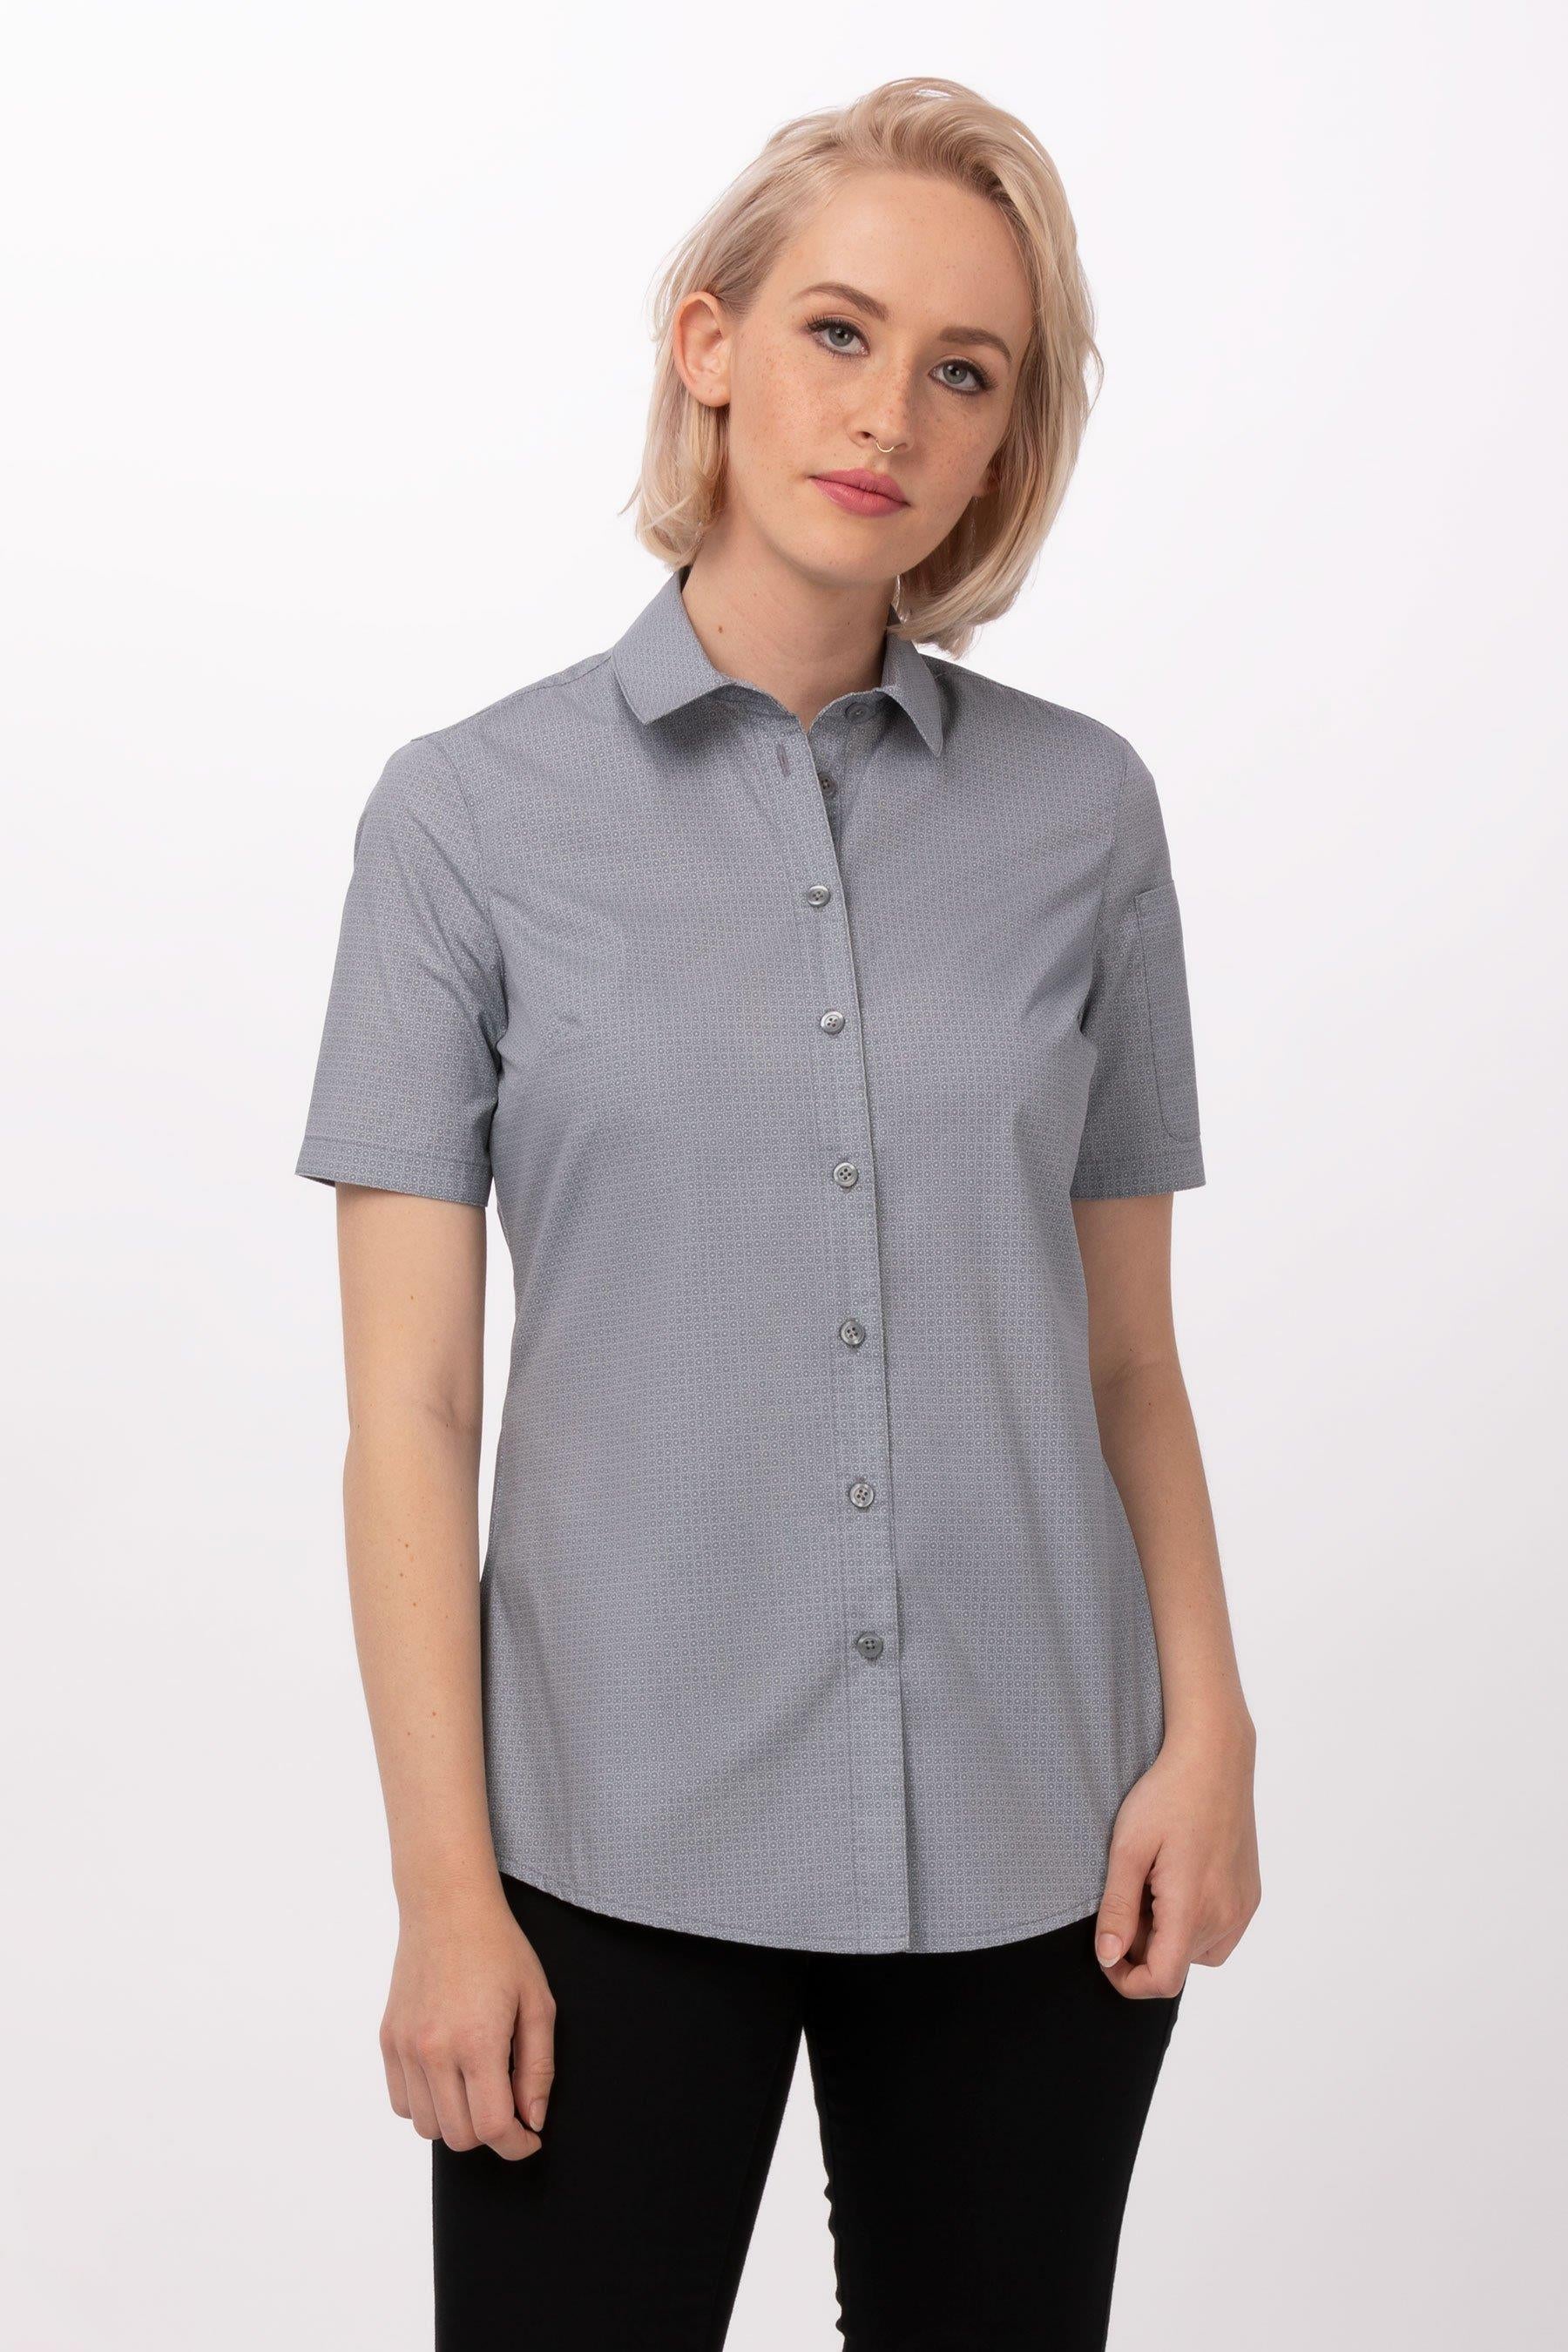 Malibu Female Shirt